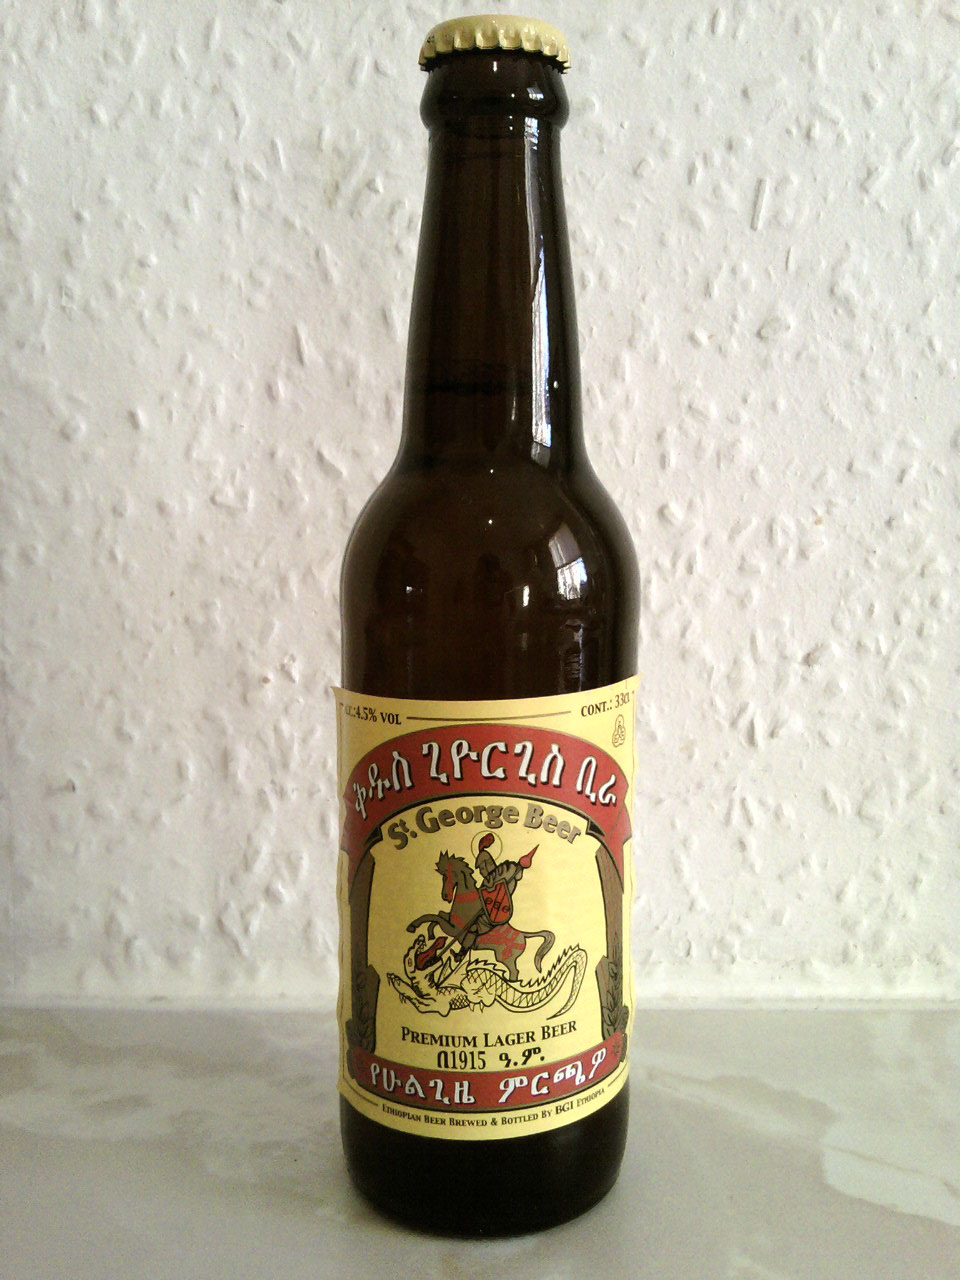 St. George dragon ethiopia bgi Addis Ababa beer